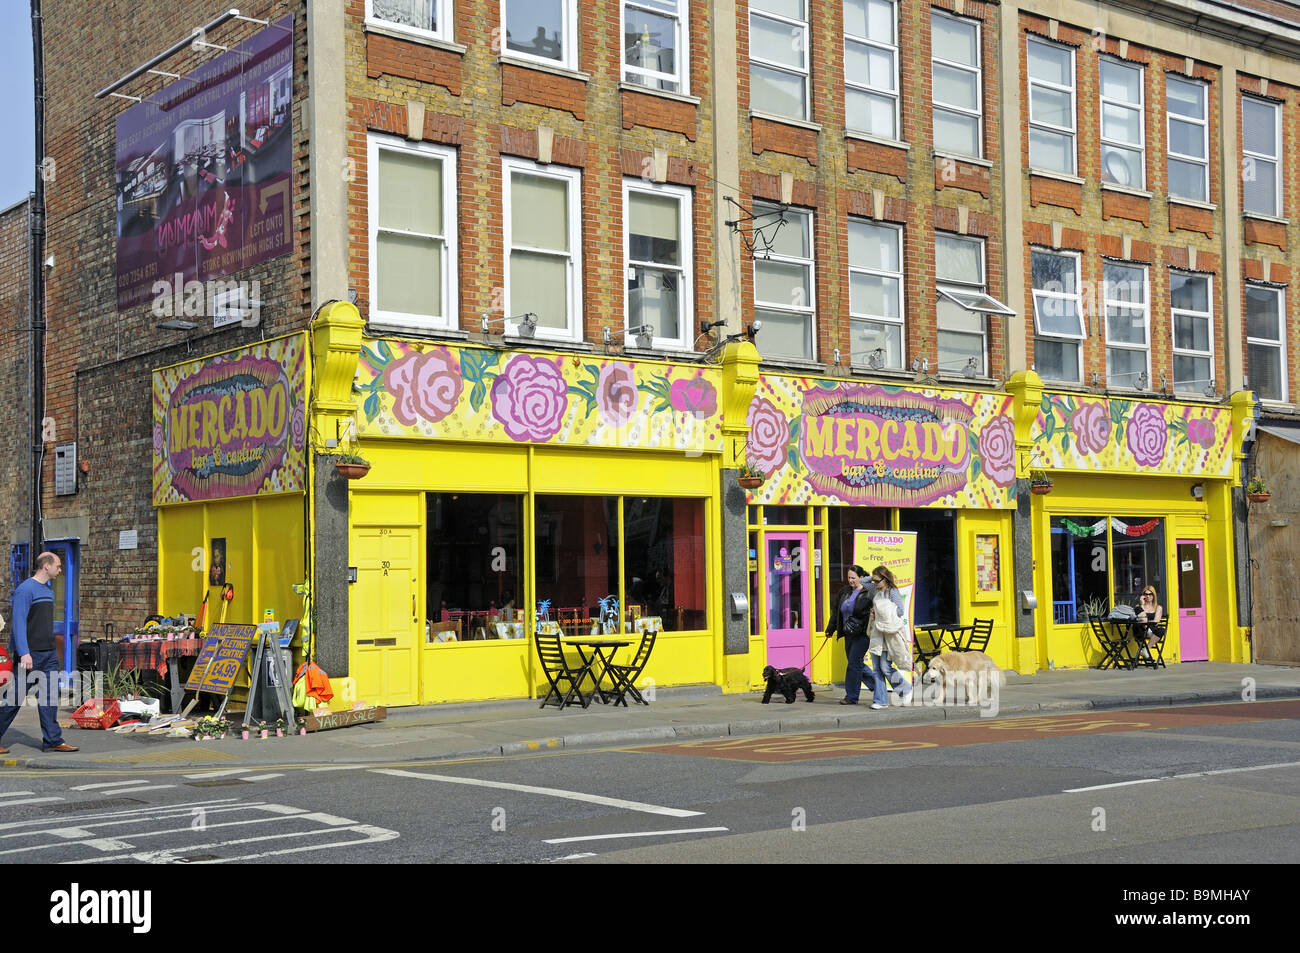 Mercado bar cantina Stoke Newington Church Street Hackney London England UK Banque D'Images